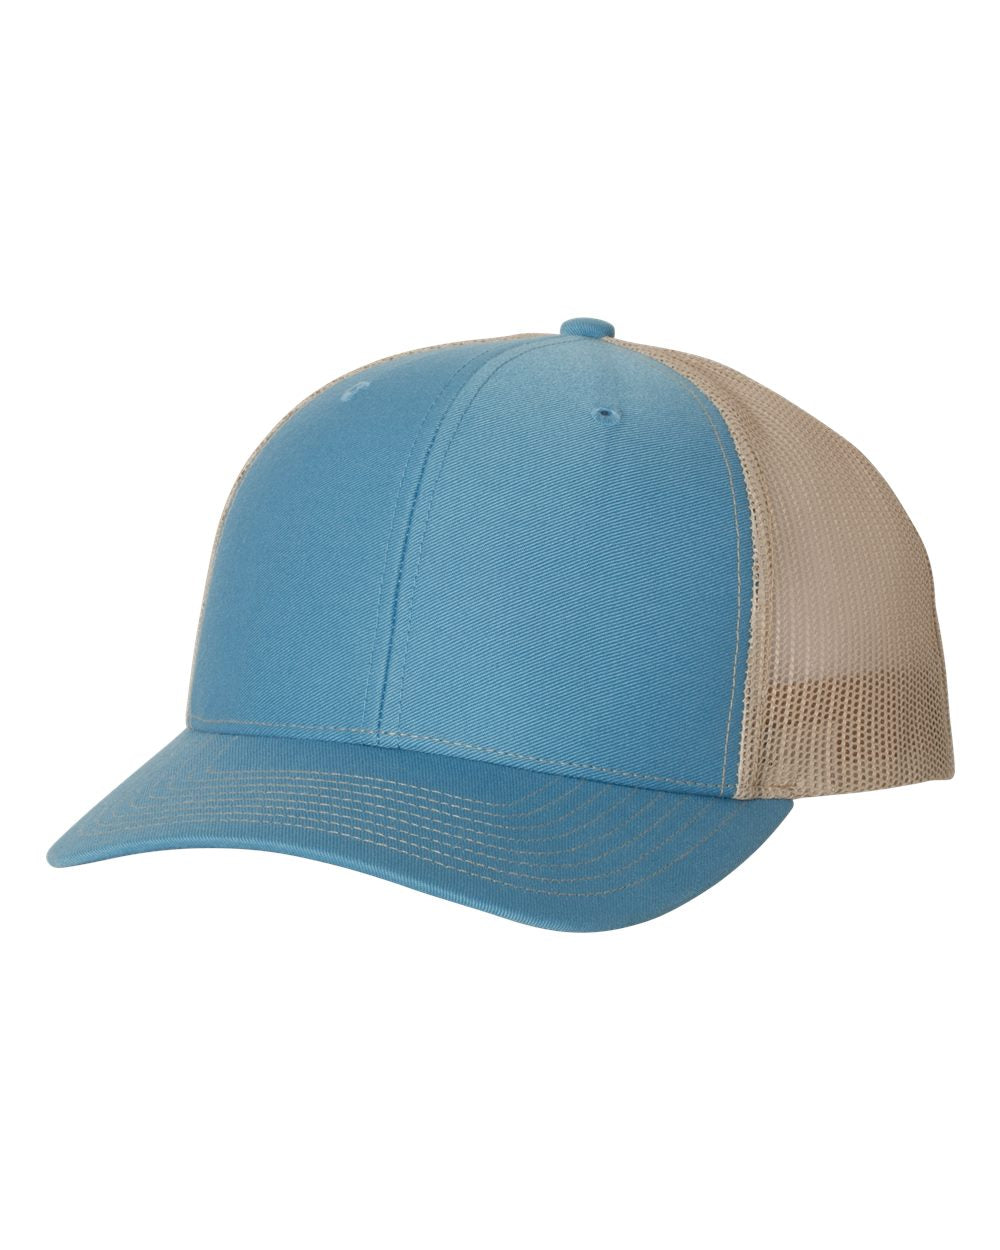 richardson cap columbia blue khaki